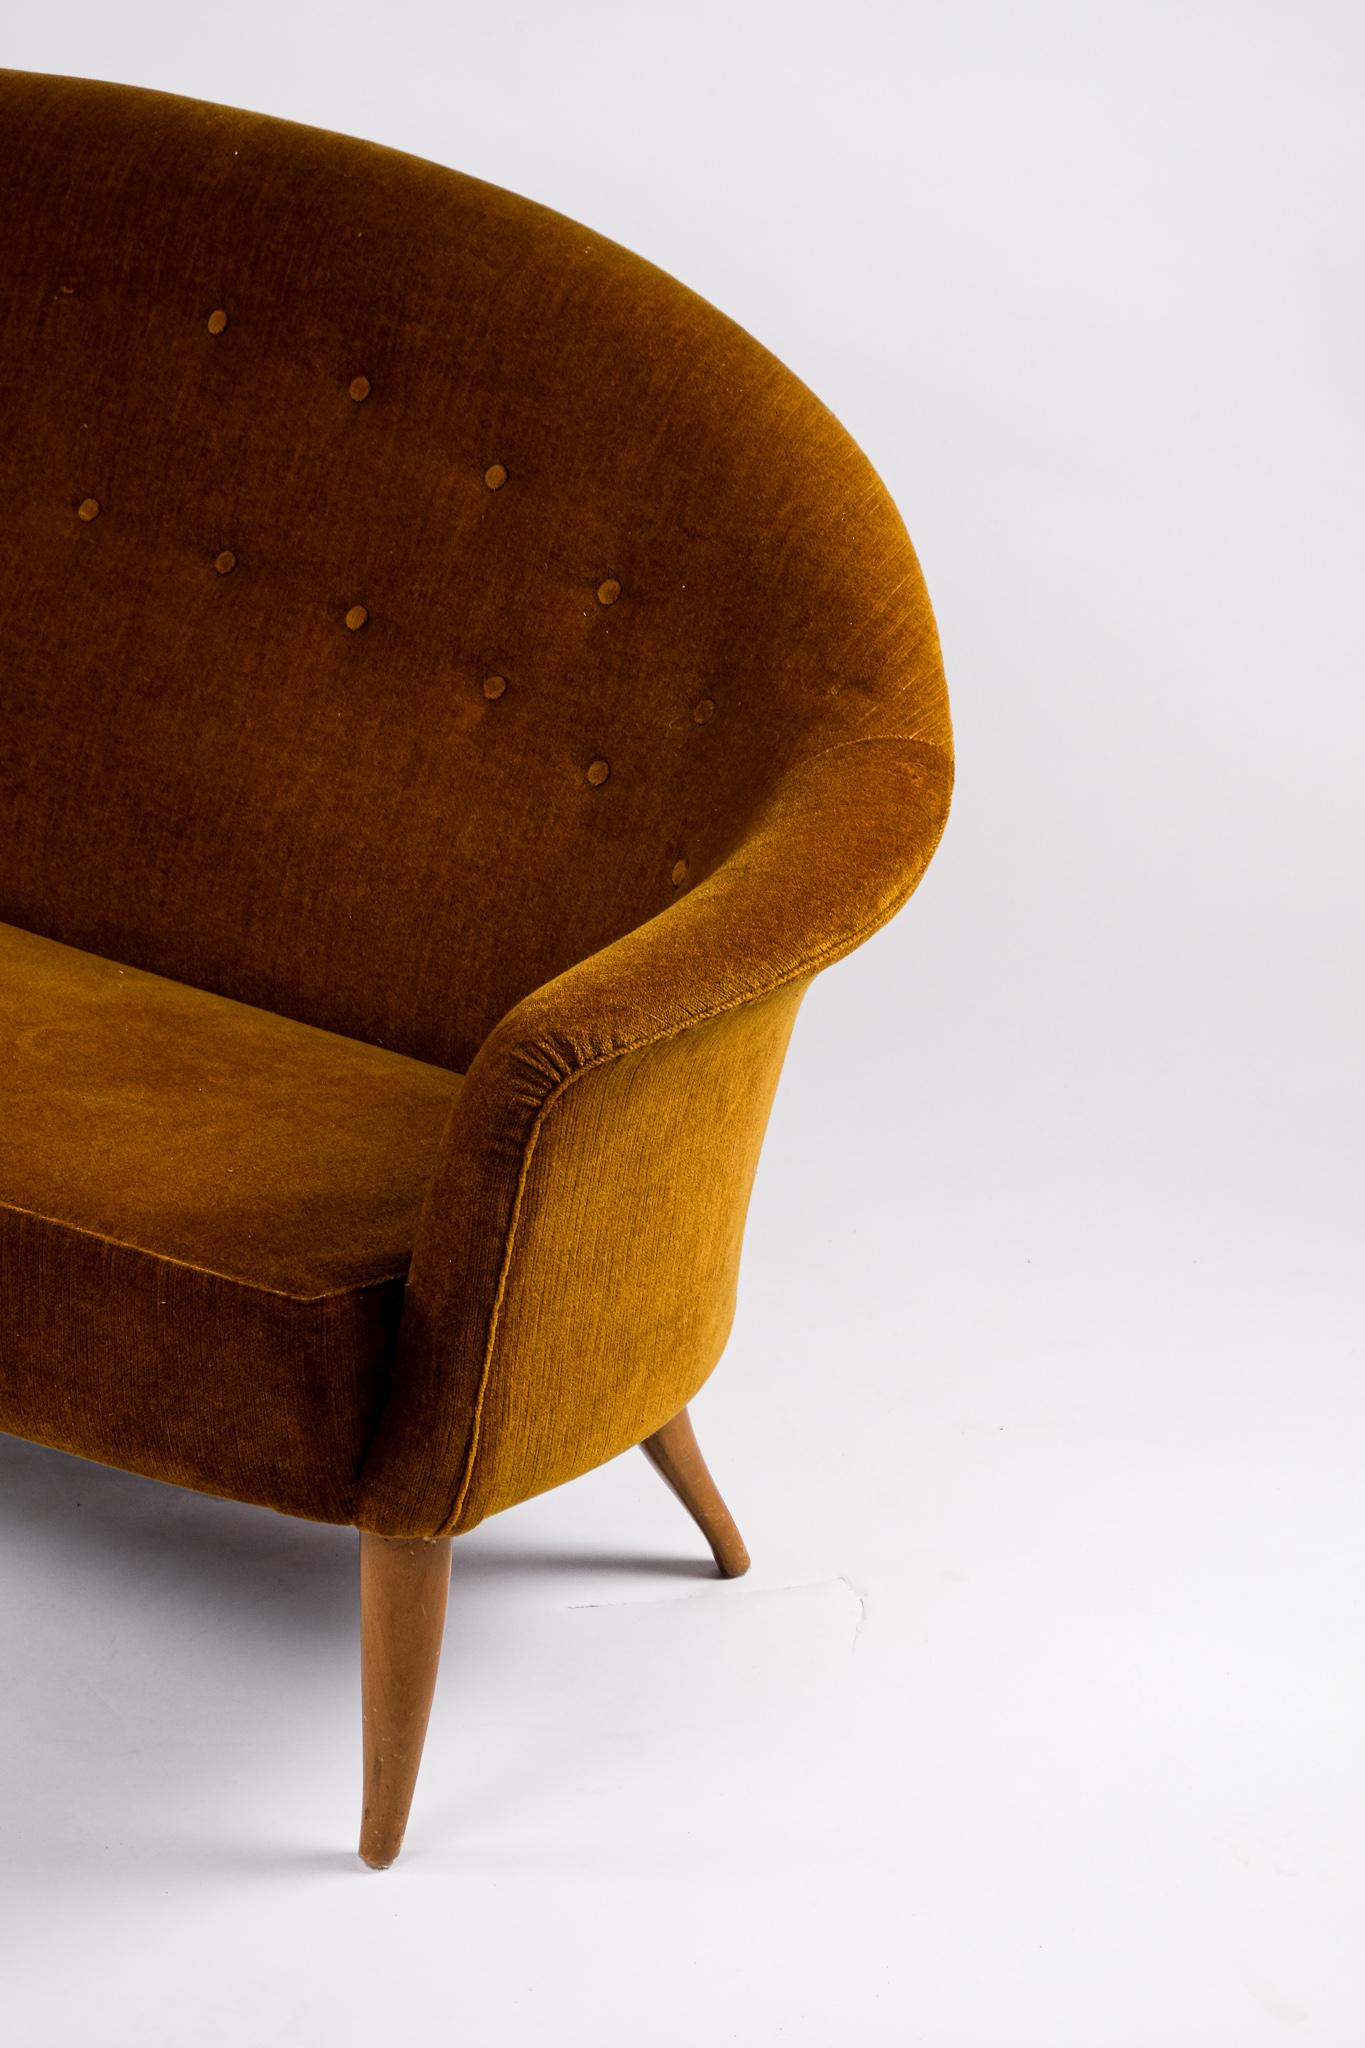 Kerstin Hörlin-Holmquist sofa model Paradiset. Produced by Nordiska Kompaniet in Sweden, 1960s. Beech legs and velvet fabric.